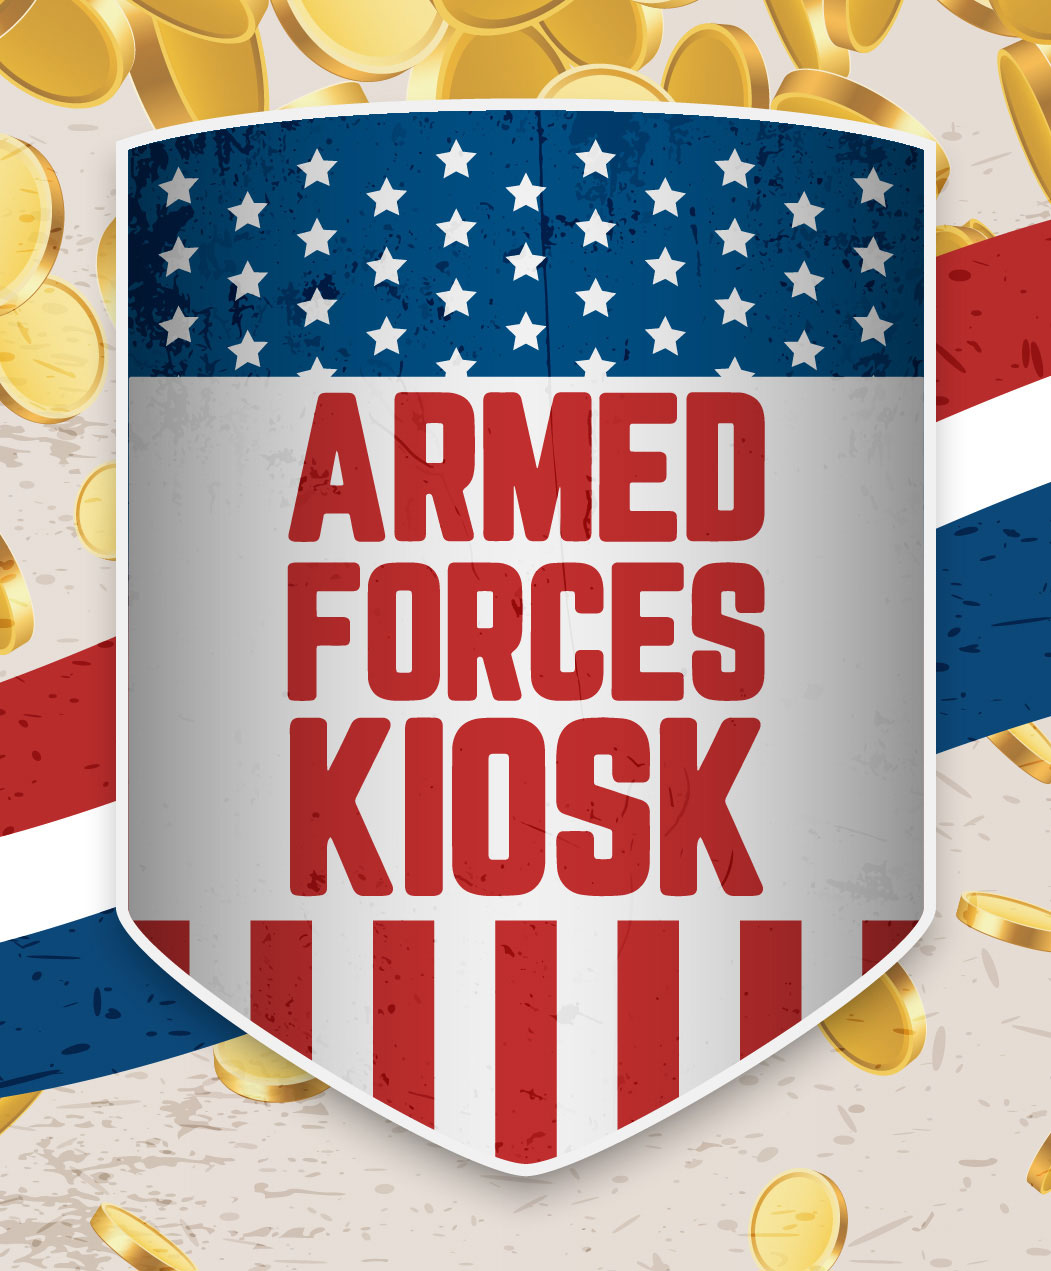 Armed Forces Kiosk